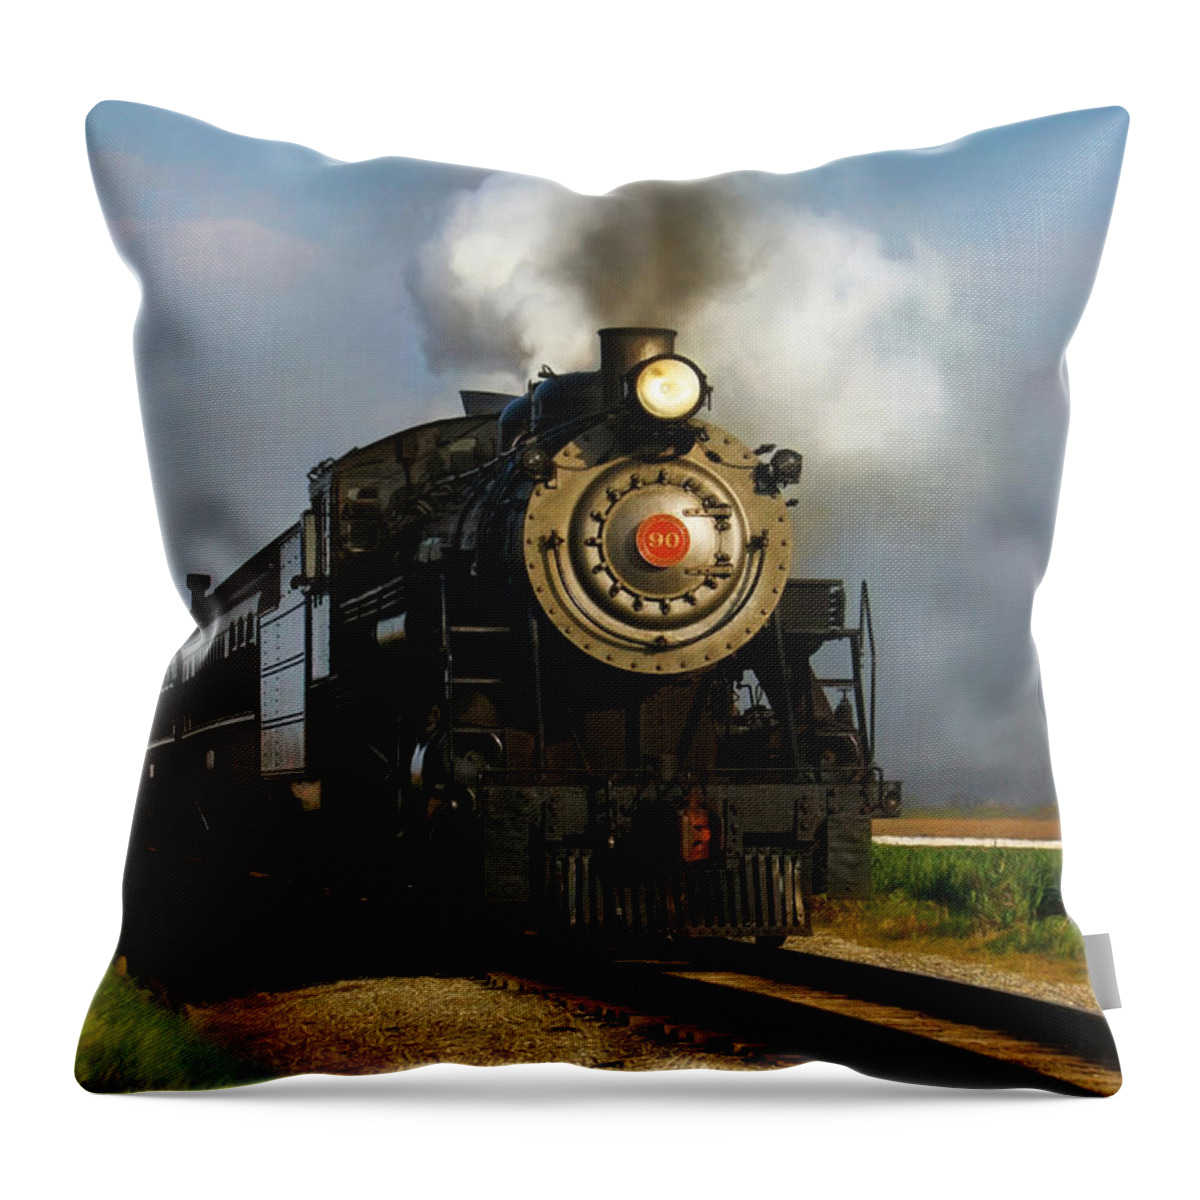 Train Throw Pillow featuring the photograph Strasburg Locomotive by Lori Deiter